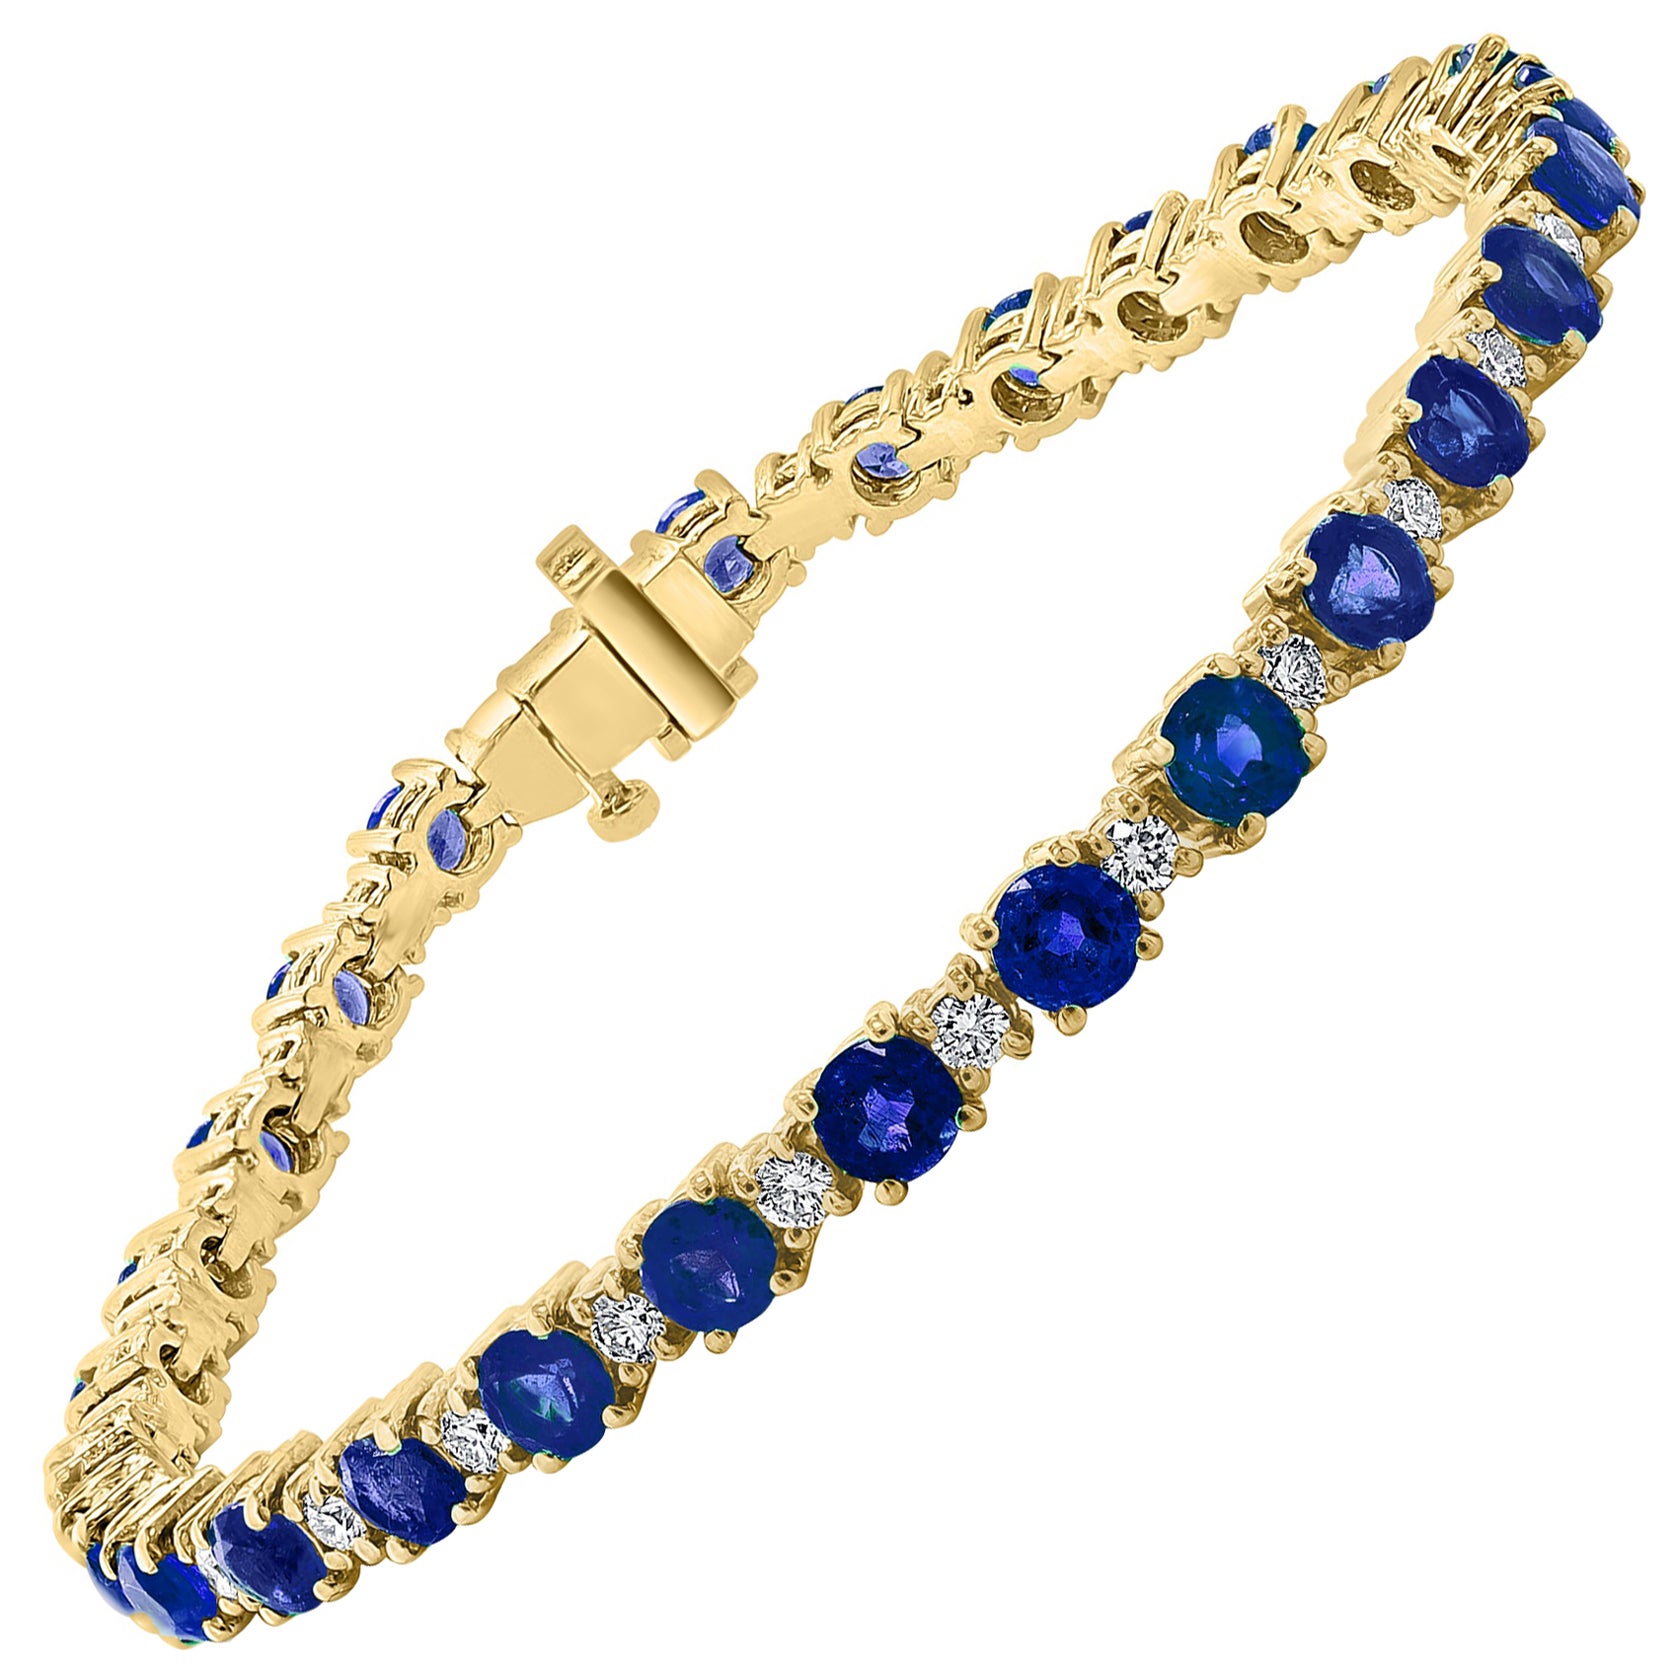 7.80 Carat Alternating Sapphire and Diamond Tennis Bracelet in 14K Yellow Gold